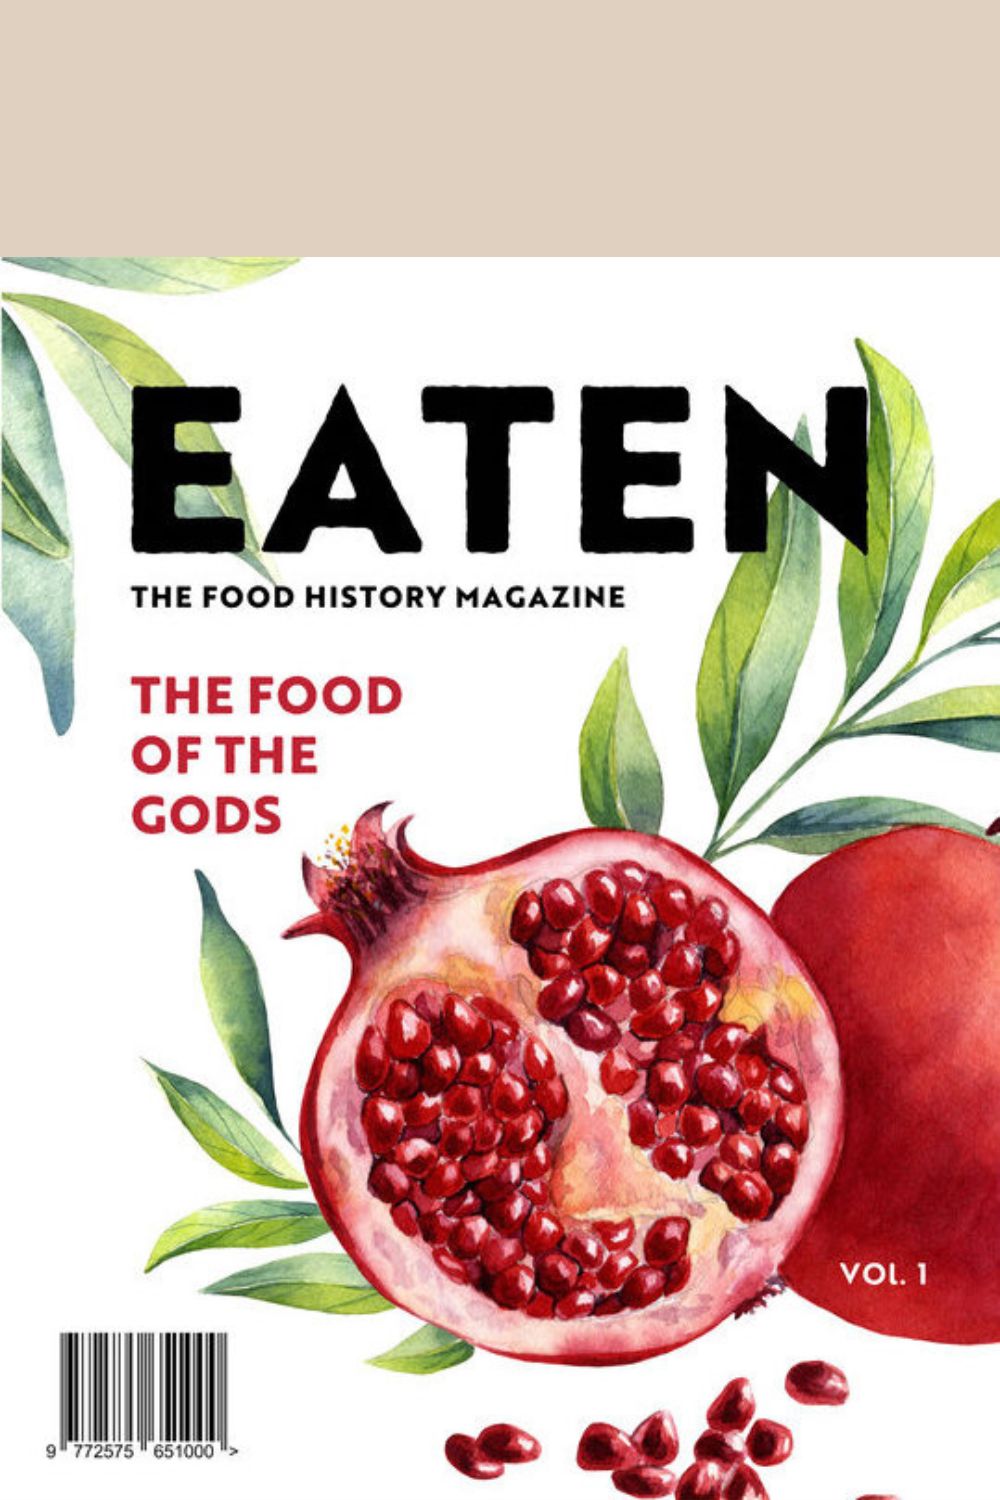 Eaten Magazine No. 1 The Food of the Gods